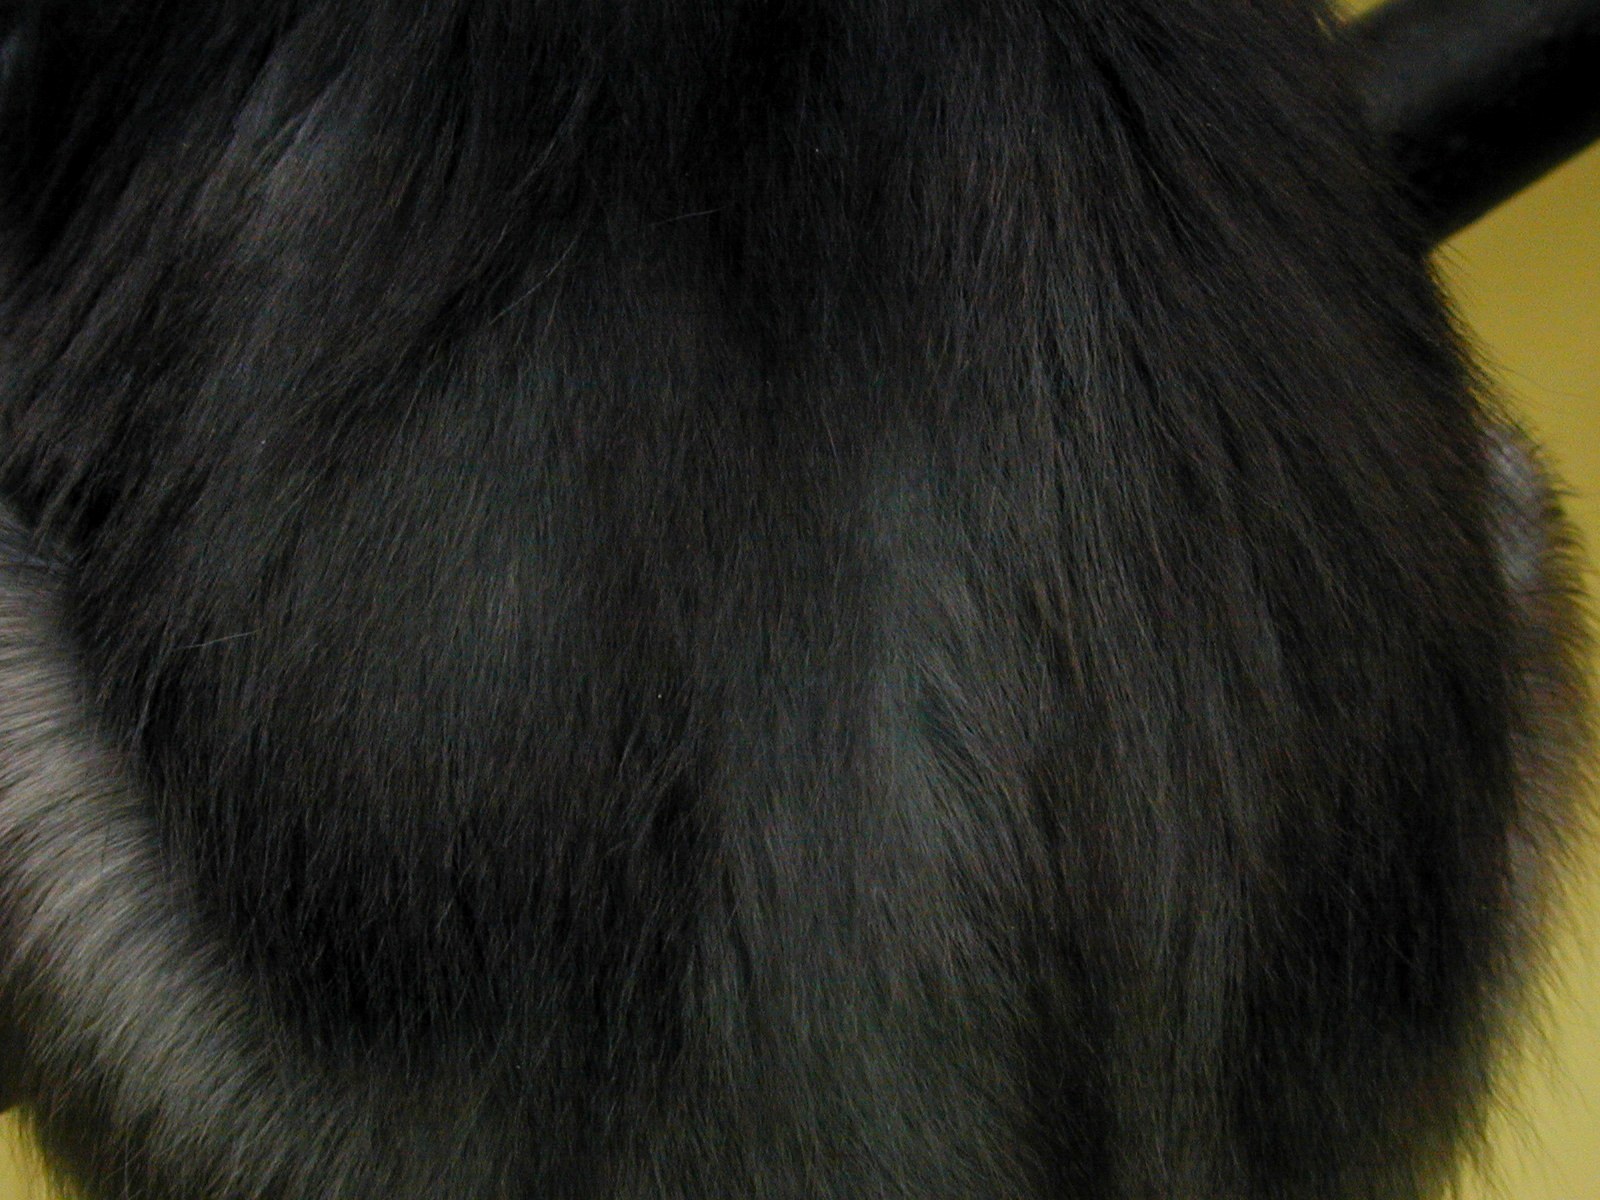 Image*After : textures : rabbit fur coat fluffy